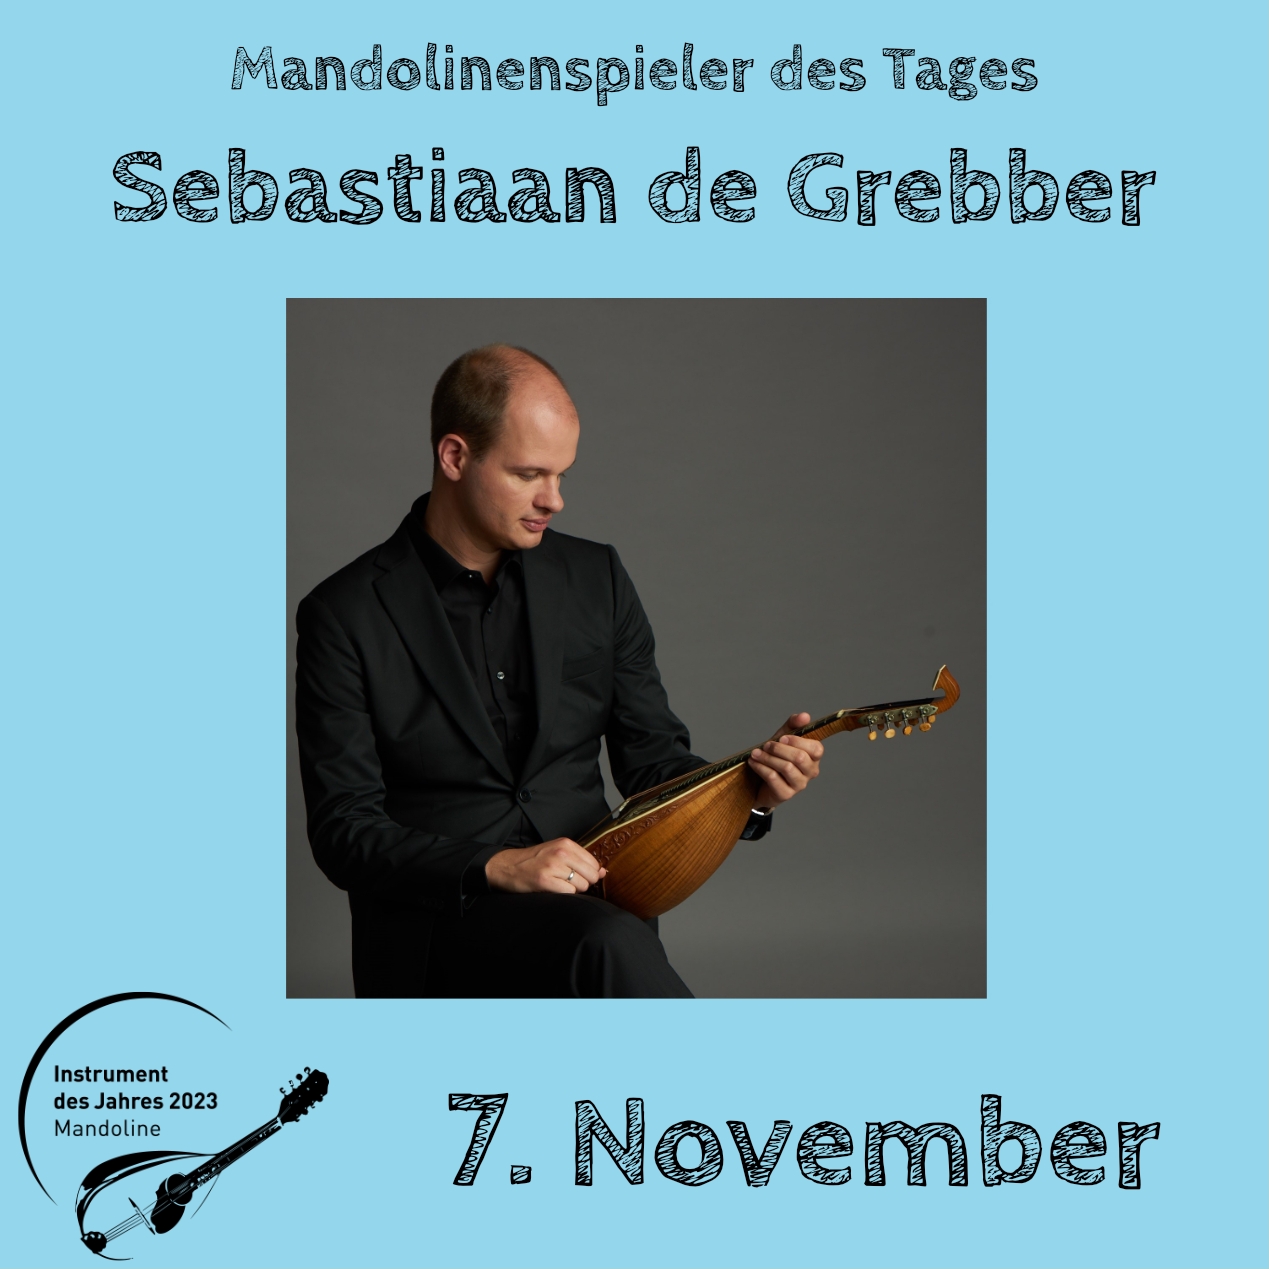 7. November - Sebastiaan de Grebber Instrument des Jahres 2023 Mandolinenspieler Mandolinenspielerin des Tages